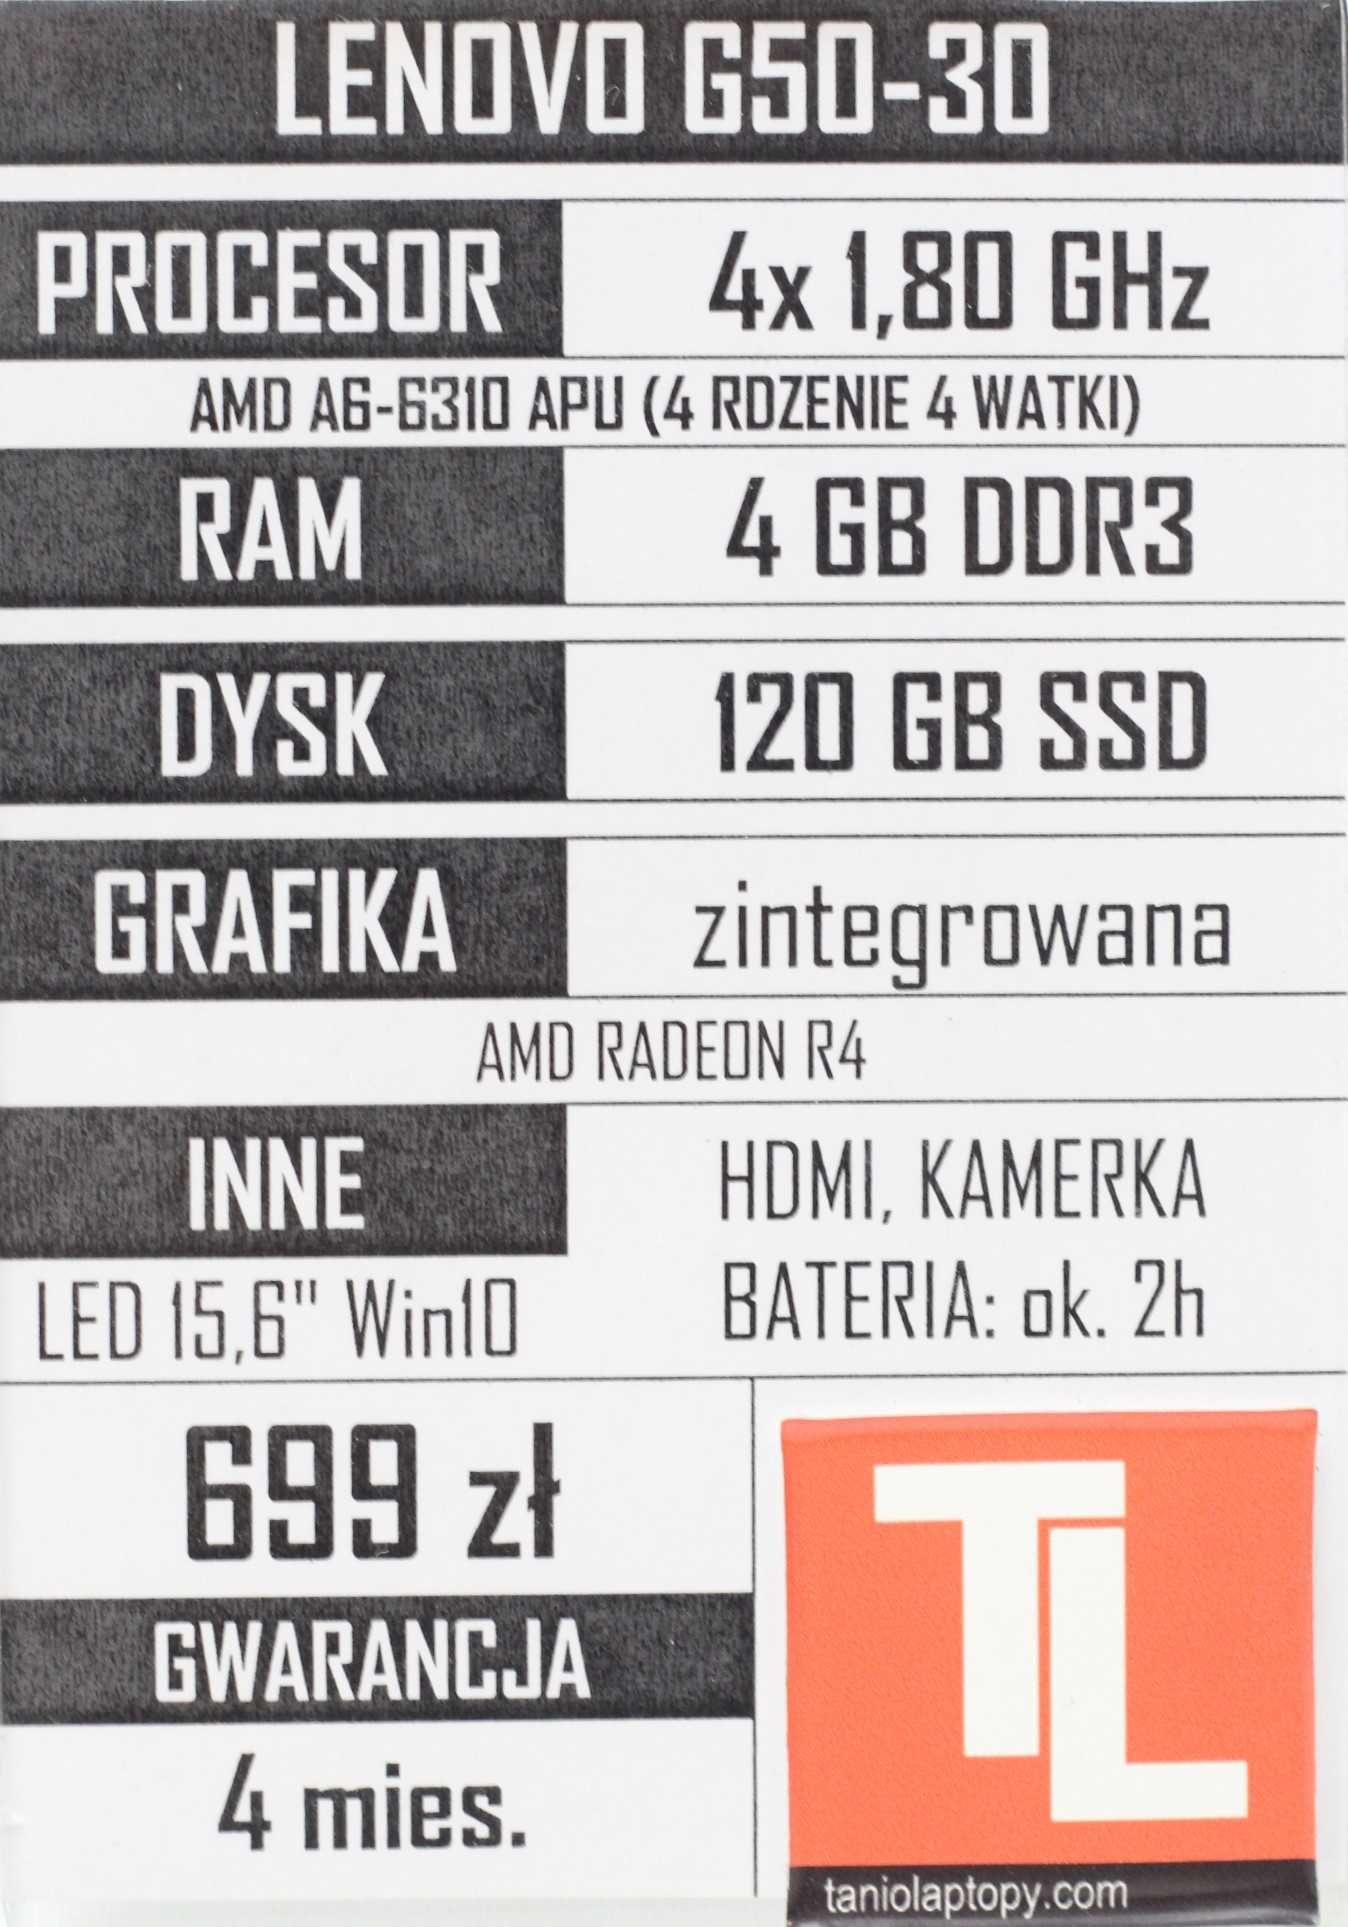 Lenovo G50-30, 4x 1,80GHz, 4GB DDR3, 120GB SSD LED 15,6"